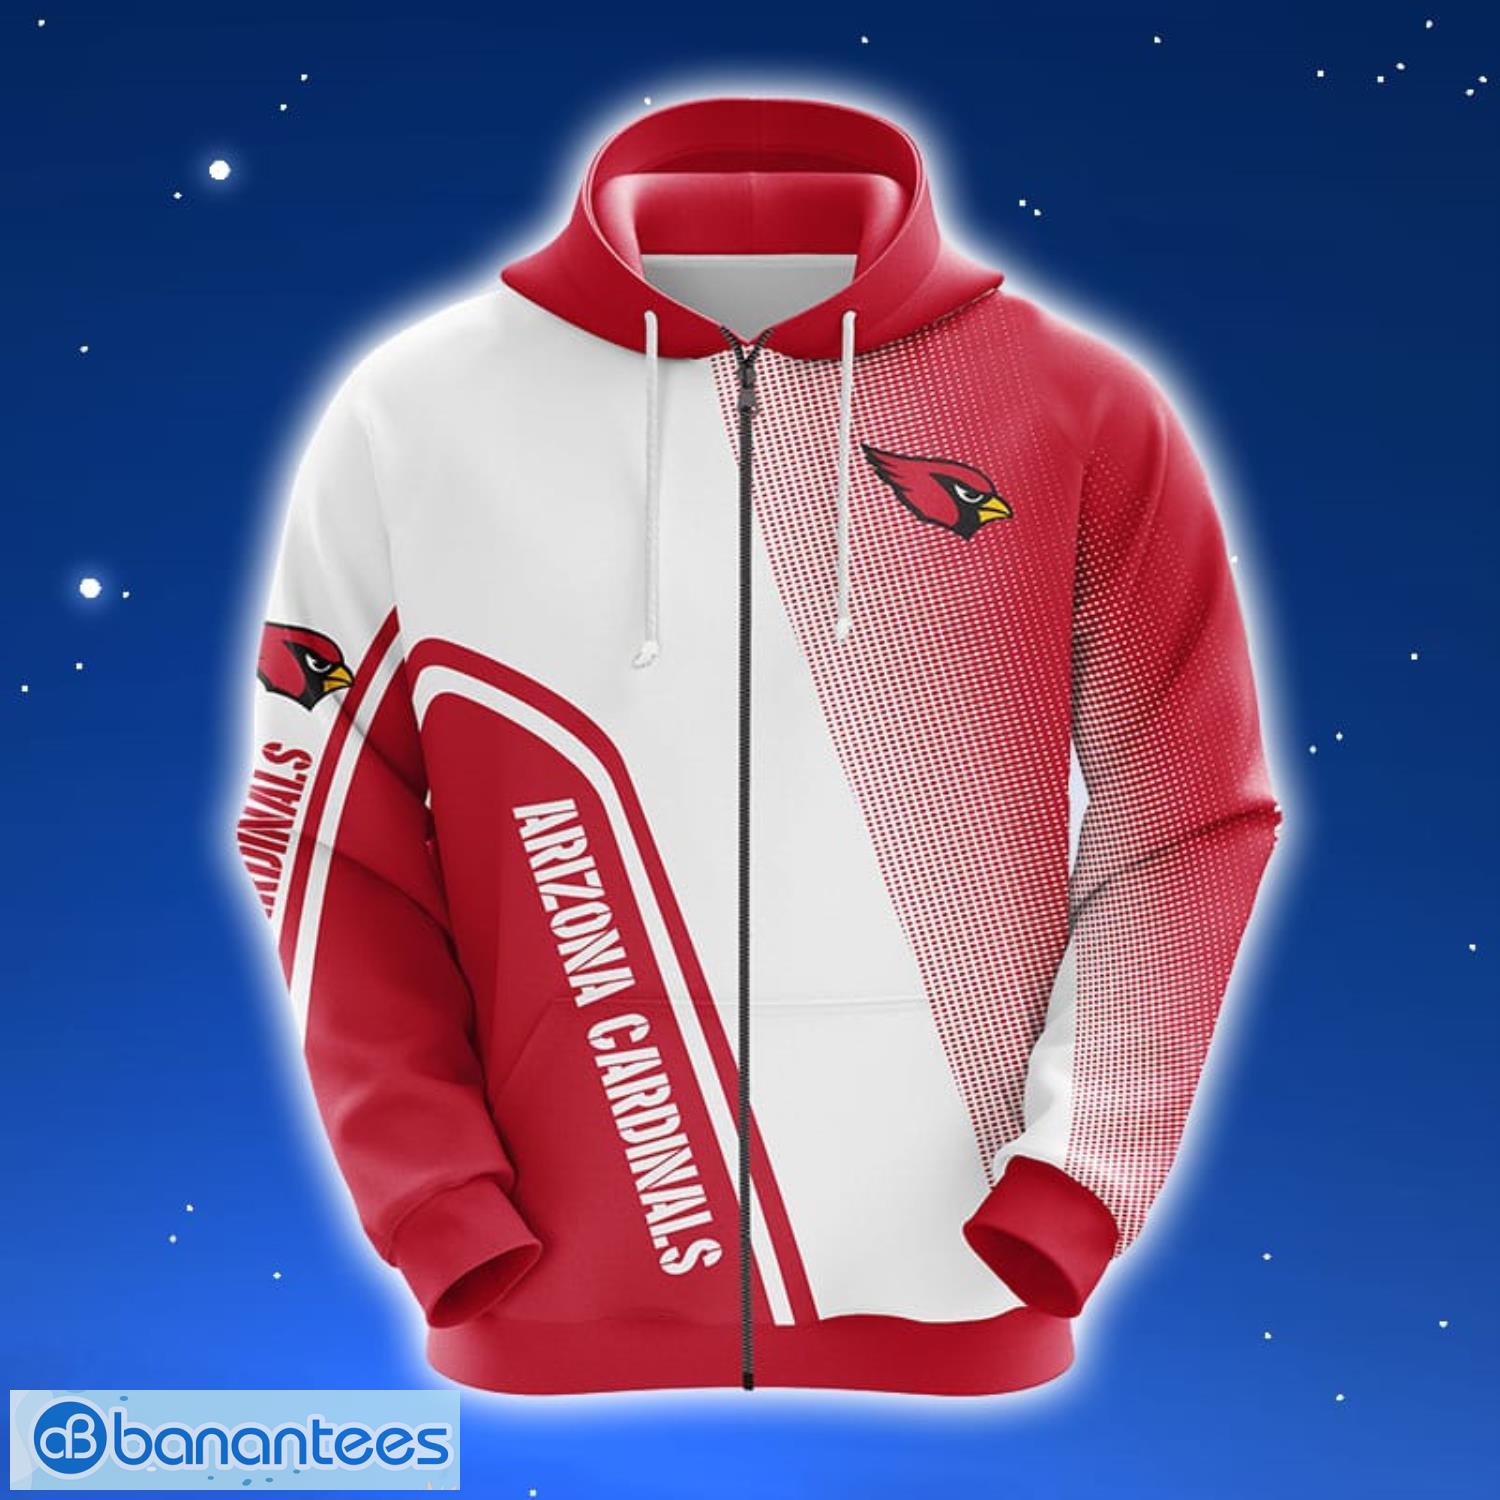 cardinals hoodie nfl